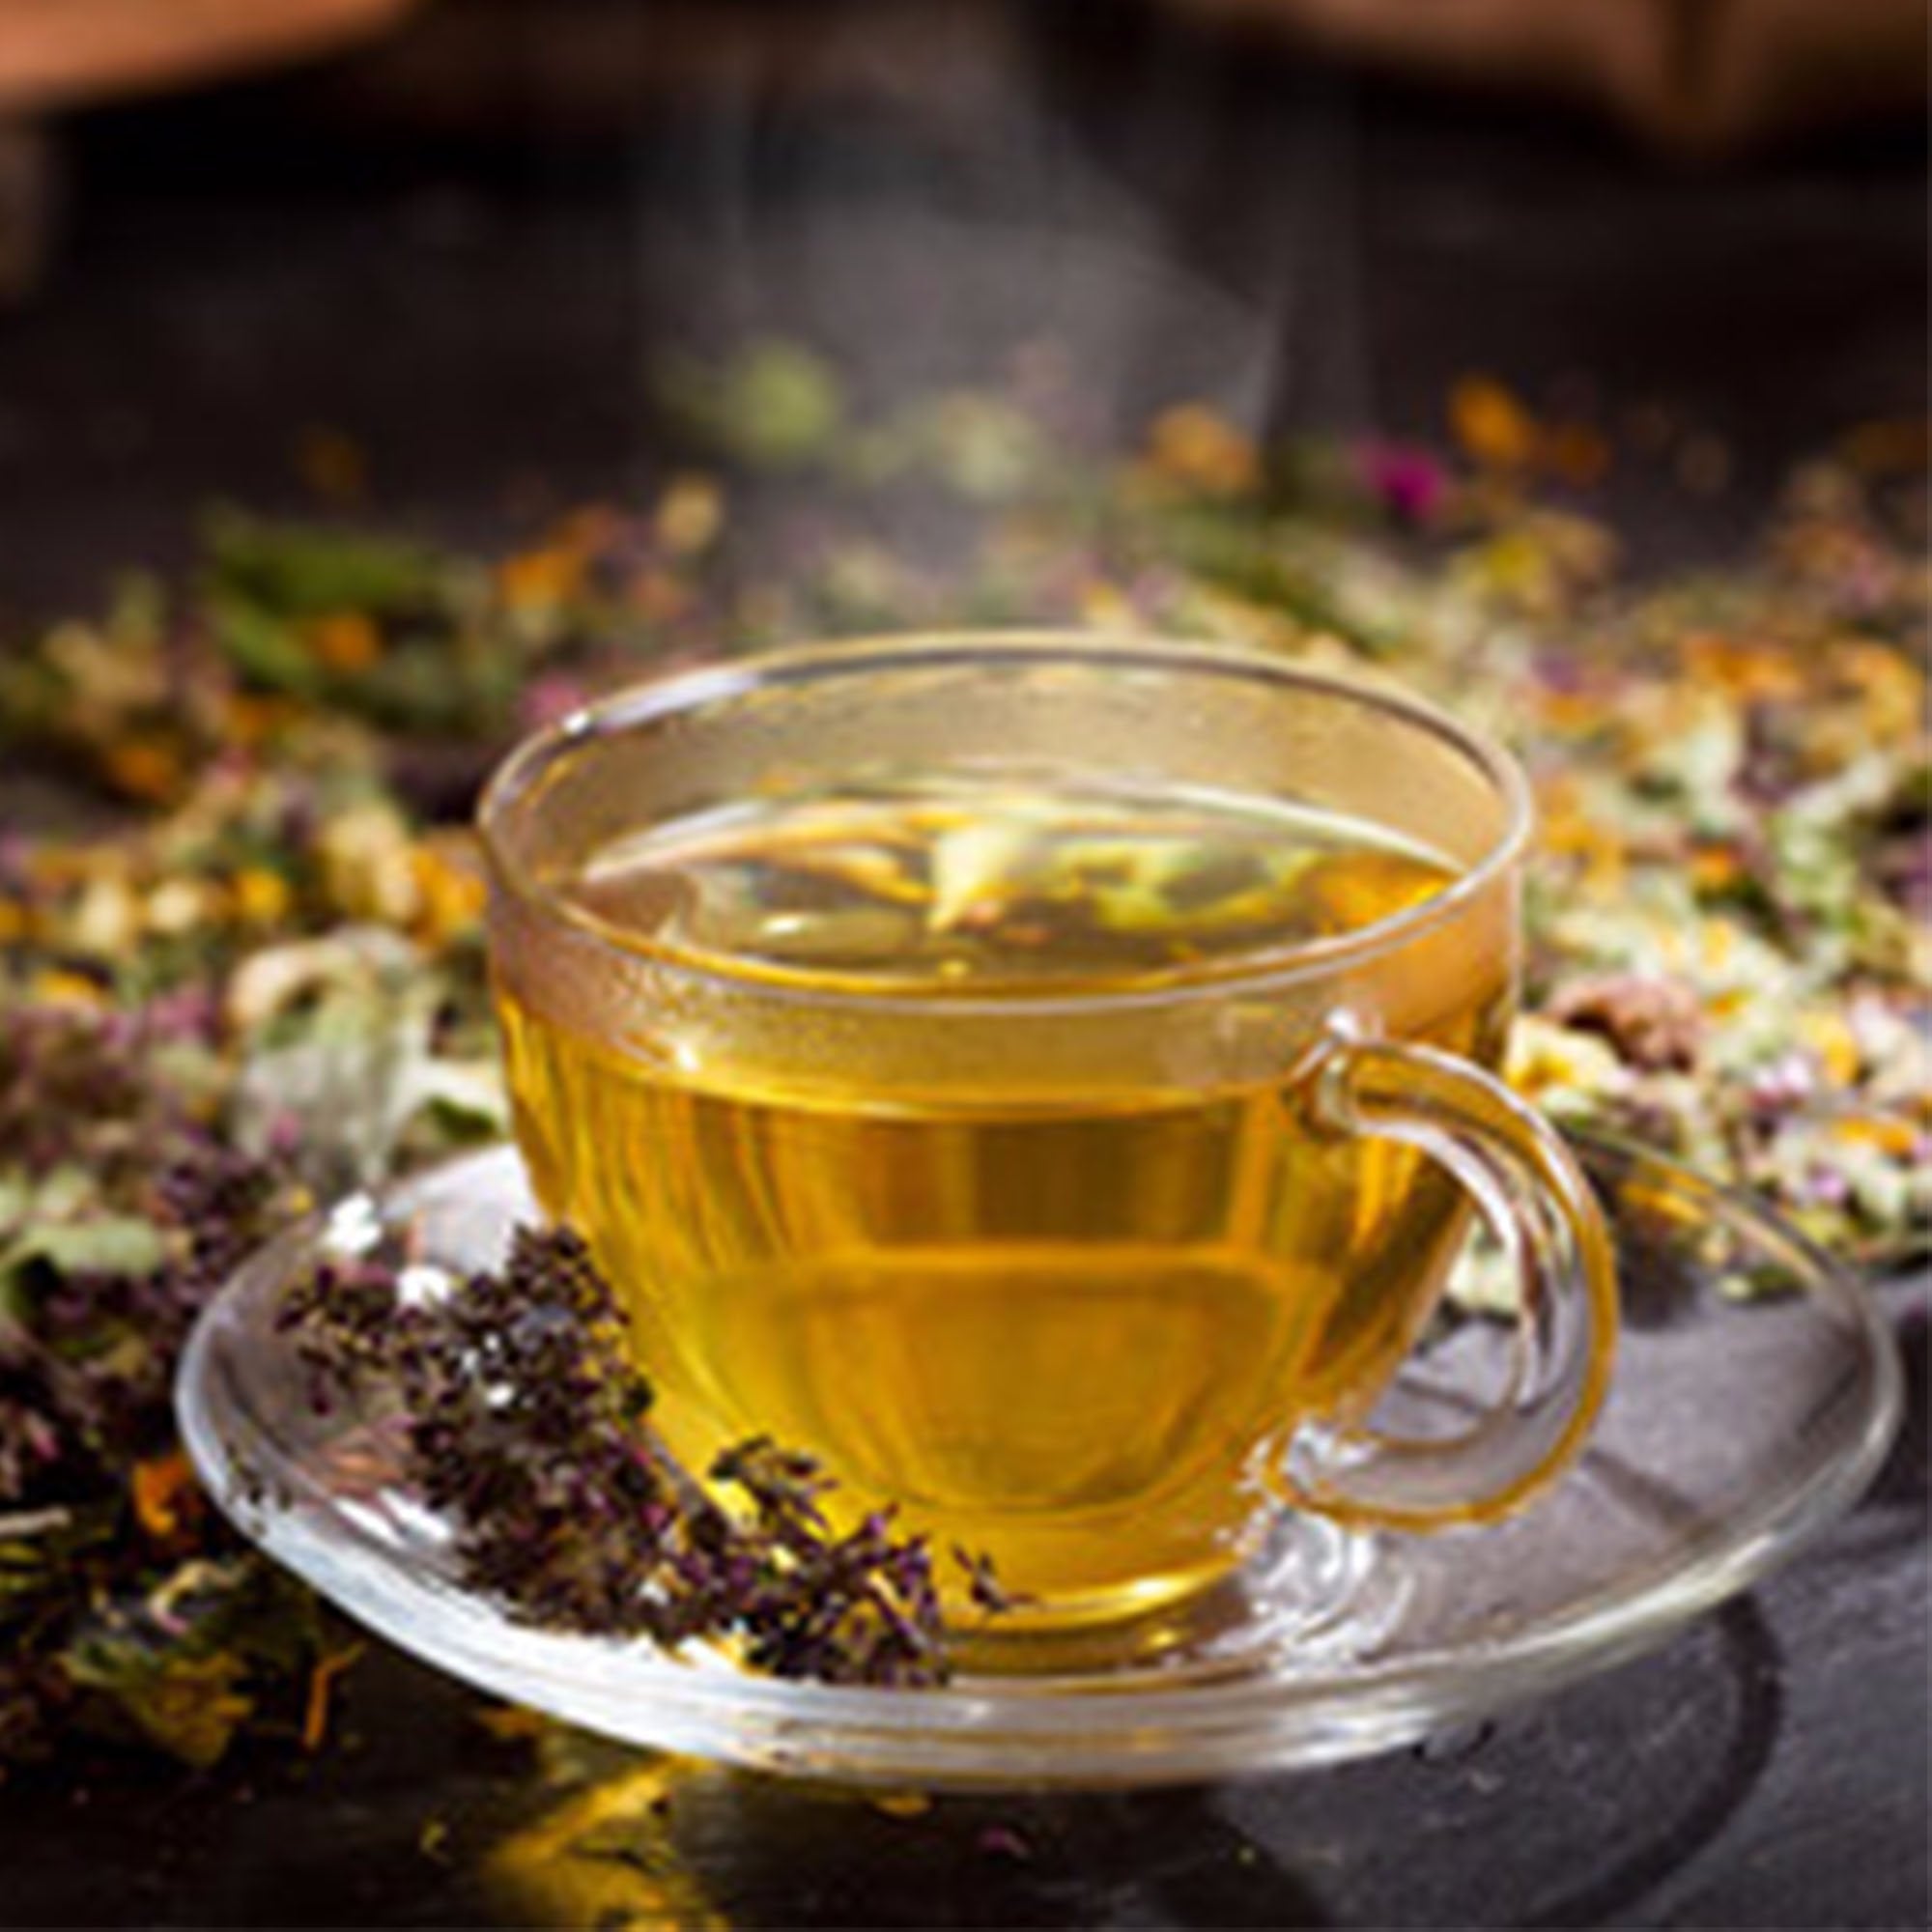 Rue (Rutae Herba) Organic Dried Herb 50g 1.76oz Herbal Tea